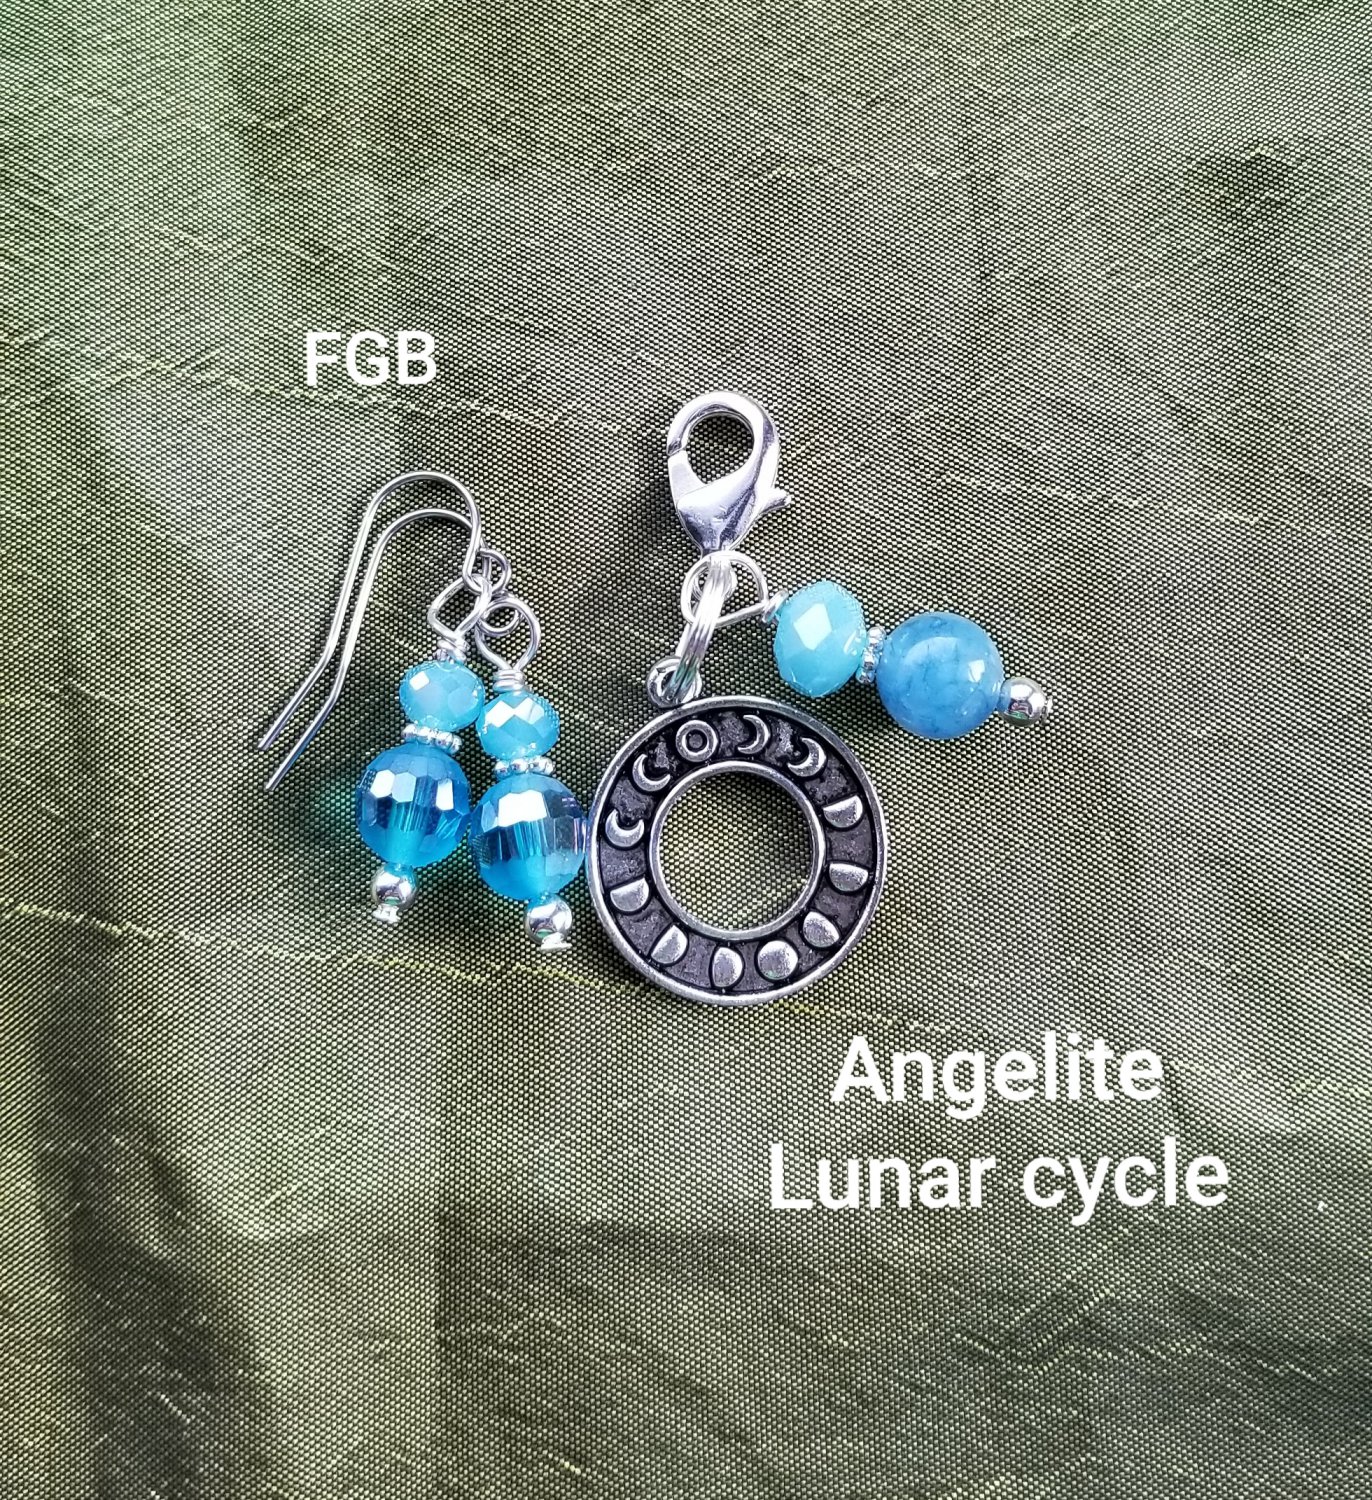 Angelite lunar cycle pet pendant